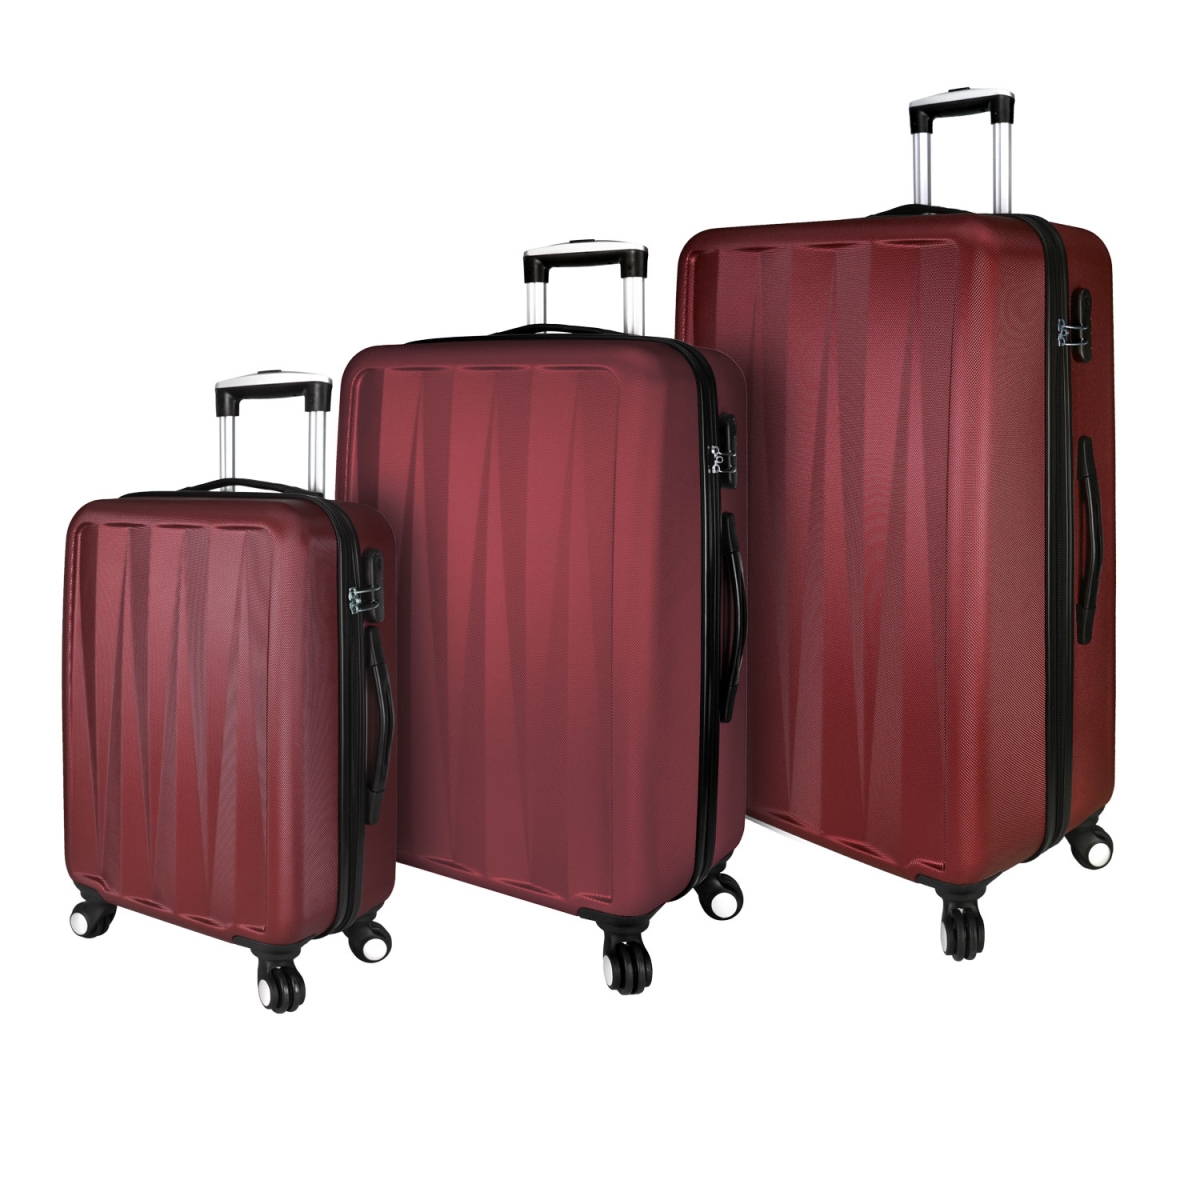 El09078r Verdugo Hardside 3 Piece Spinner Luggage Set, Red